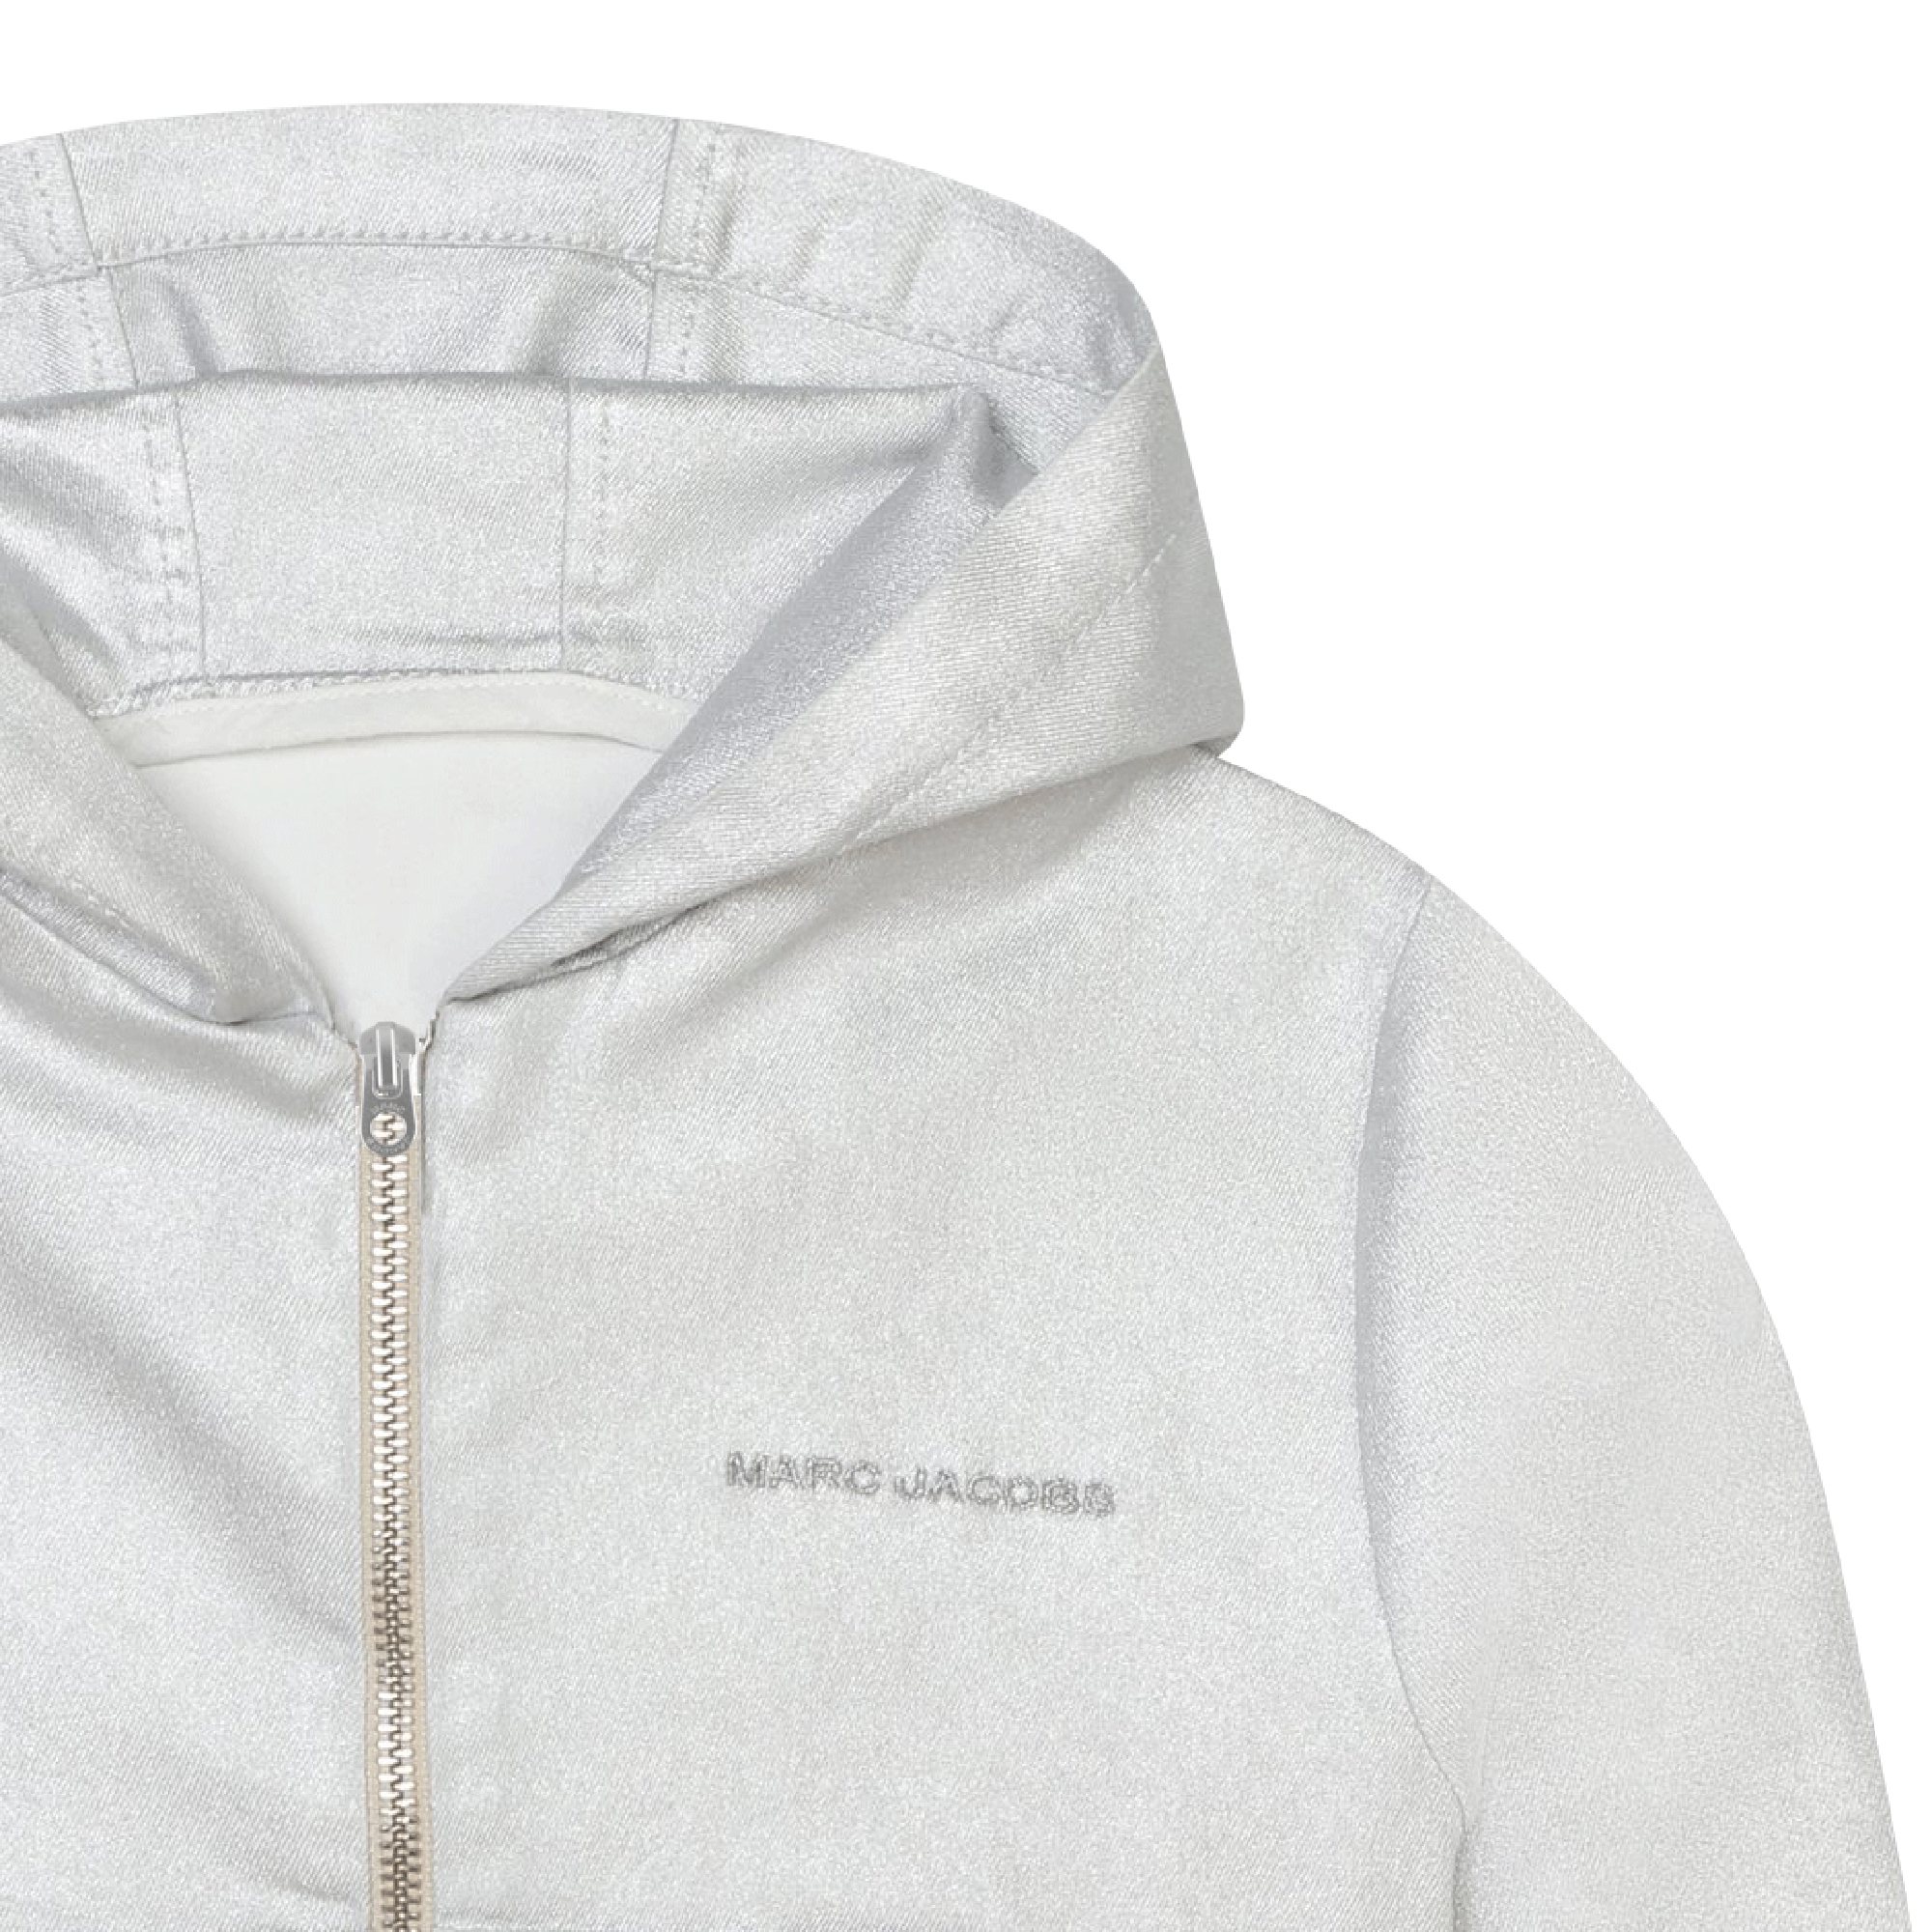 Cropped zip-up sweatshirt MARC JACOBS for GIRL